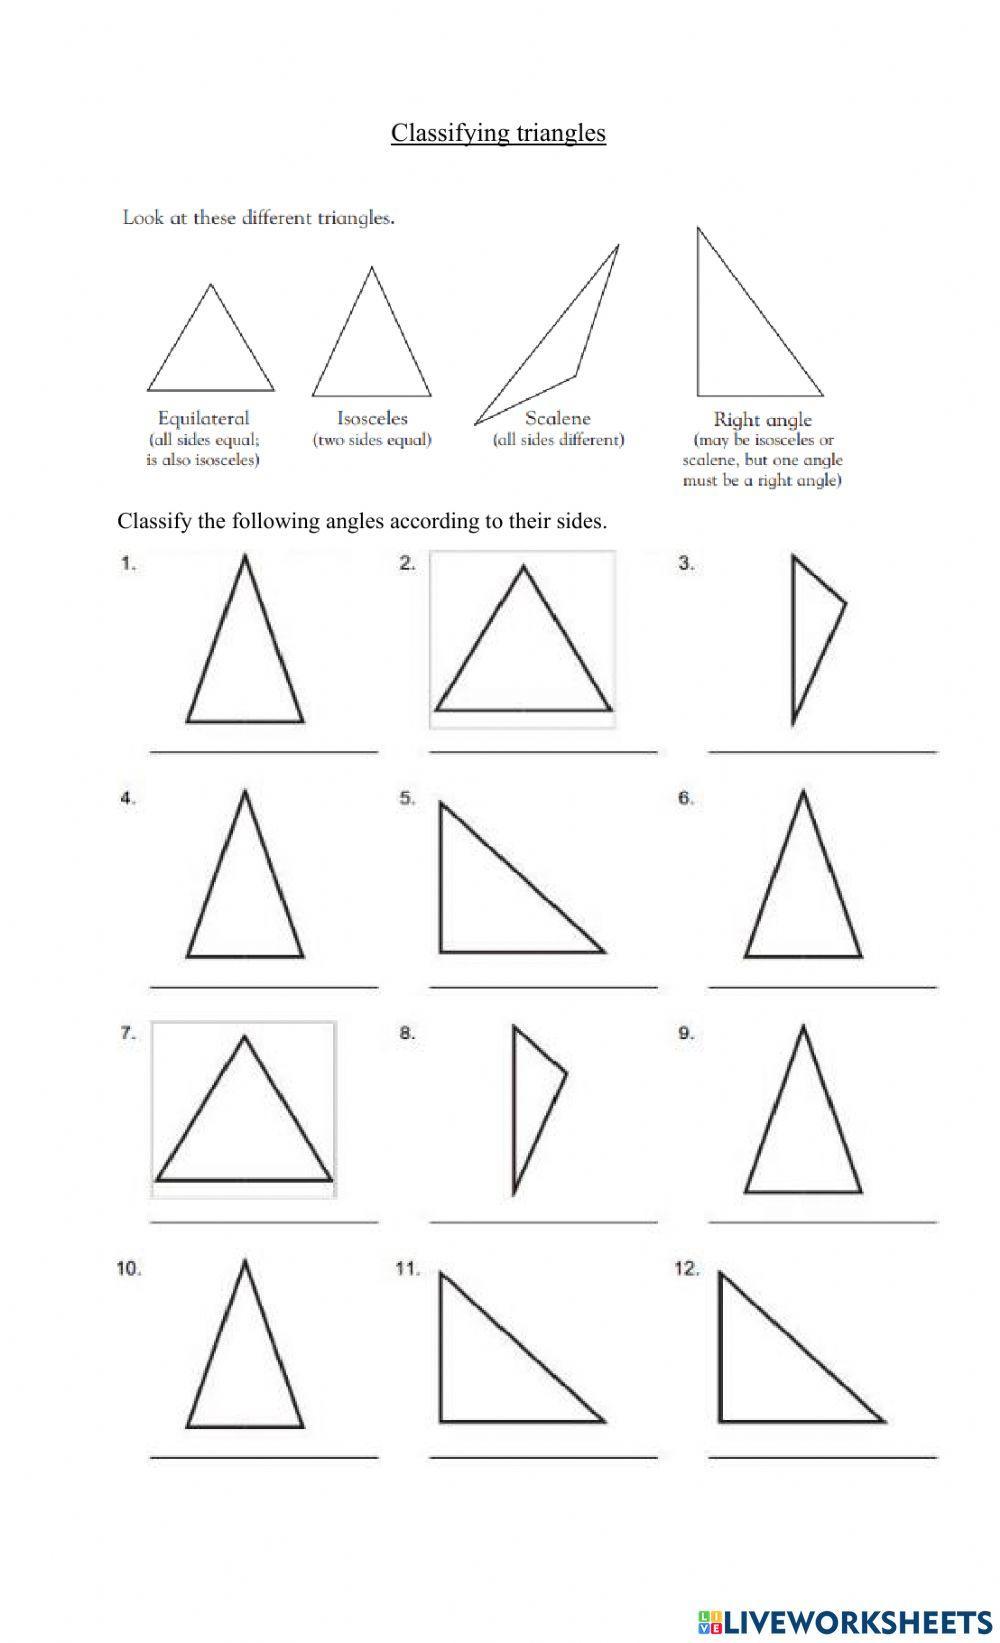 Identifying triangles